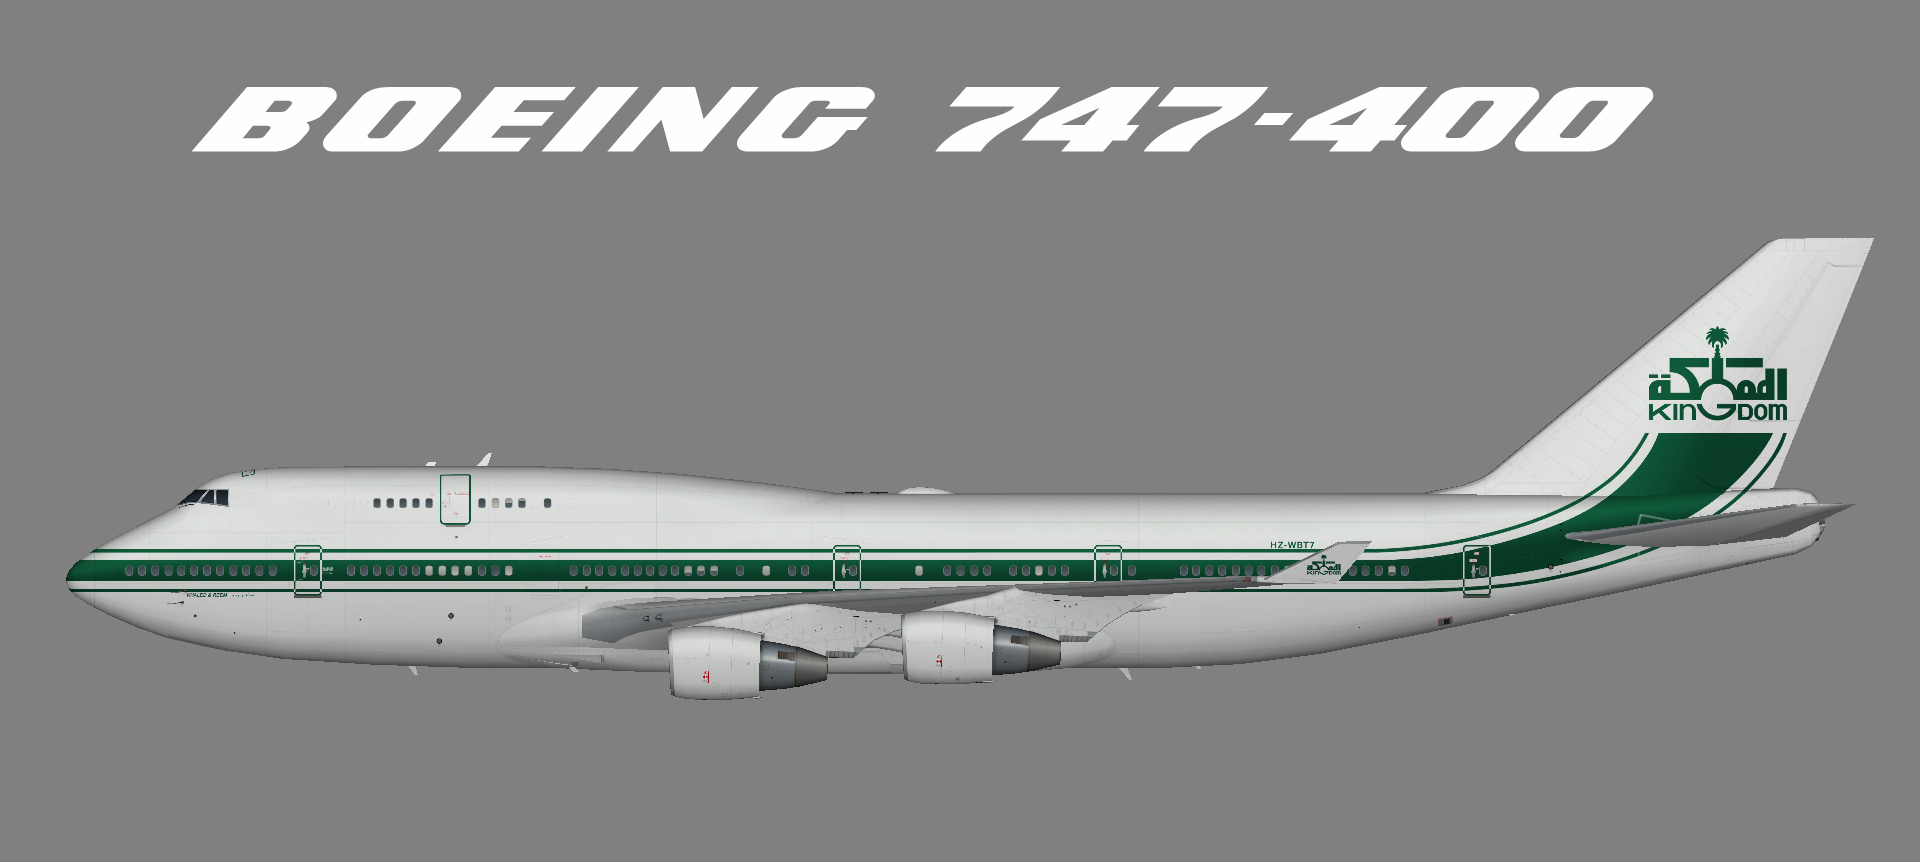 Kingdom Holding 747-400